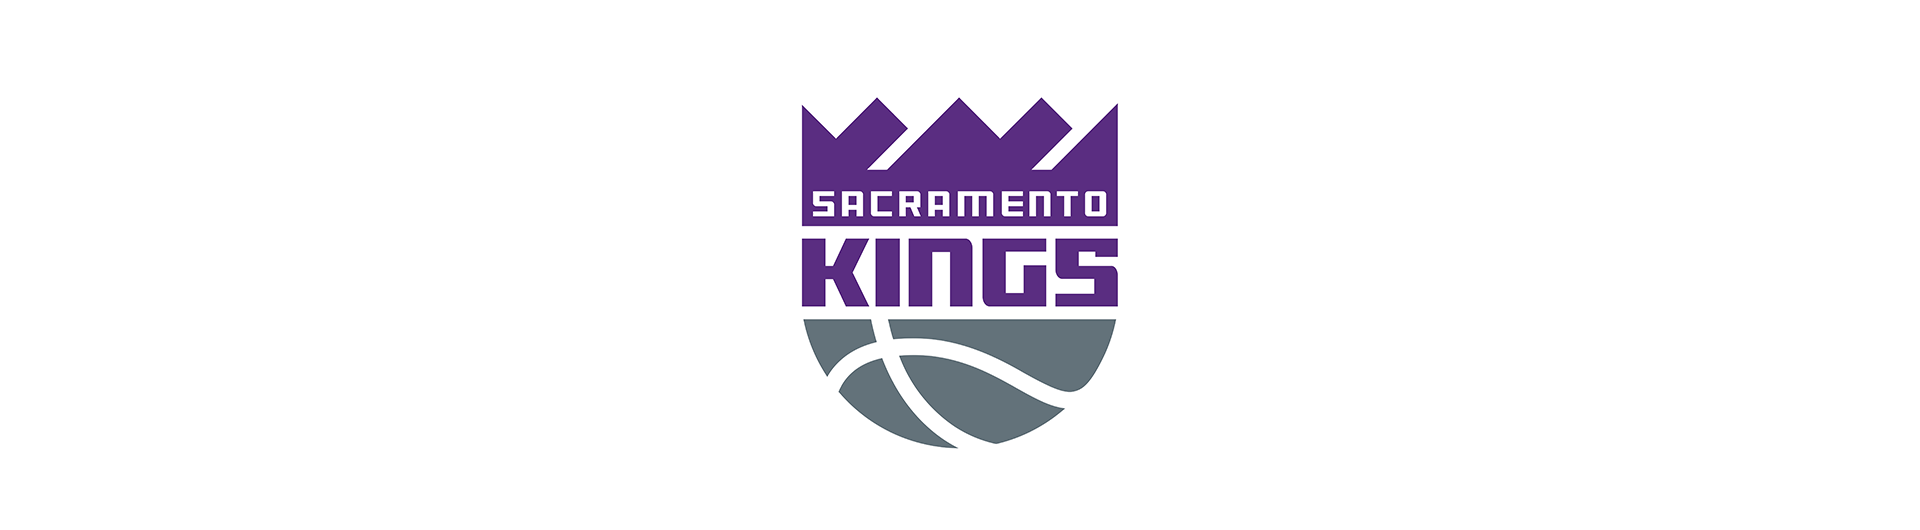 Sacramenton Kings (SAC)